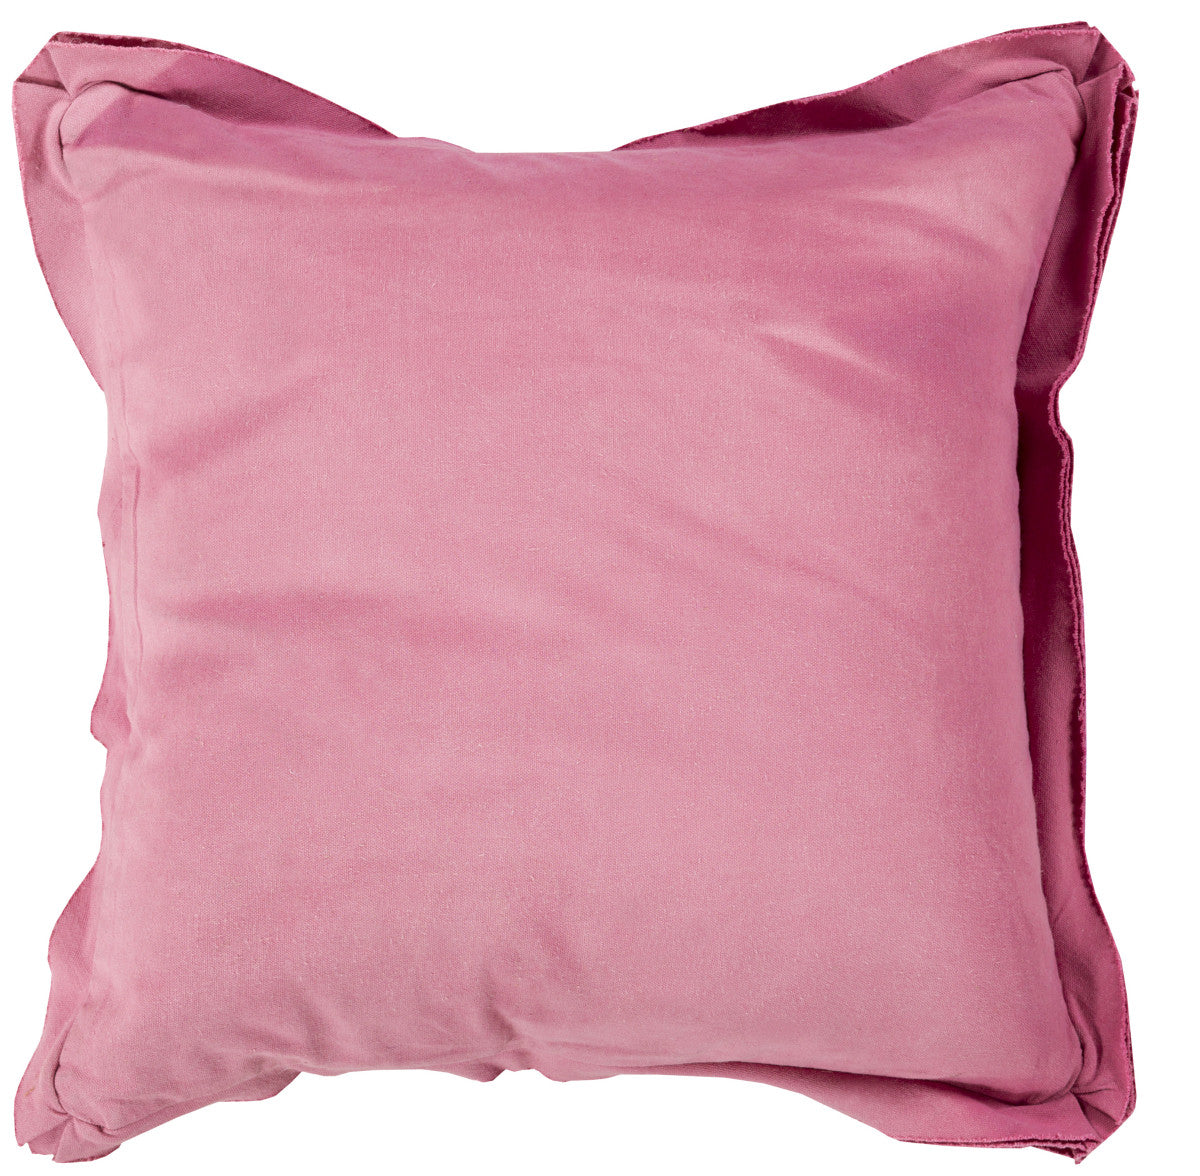 Surya Triple Flange Simple Sophistication TF-007 Pillow main image